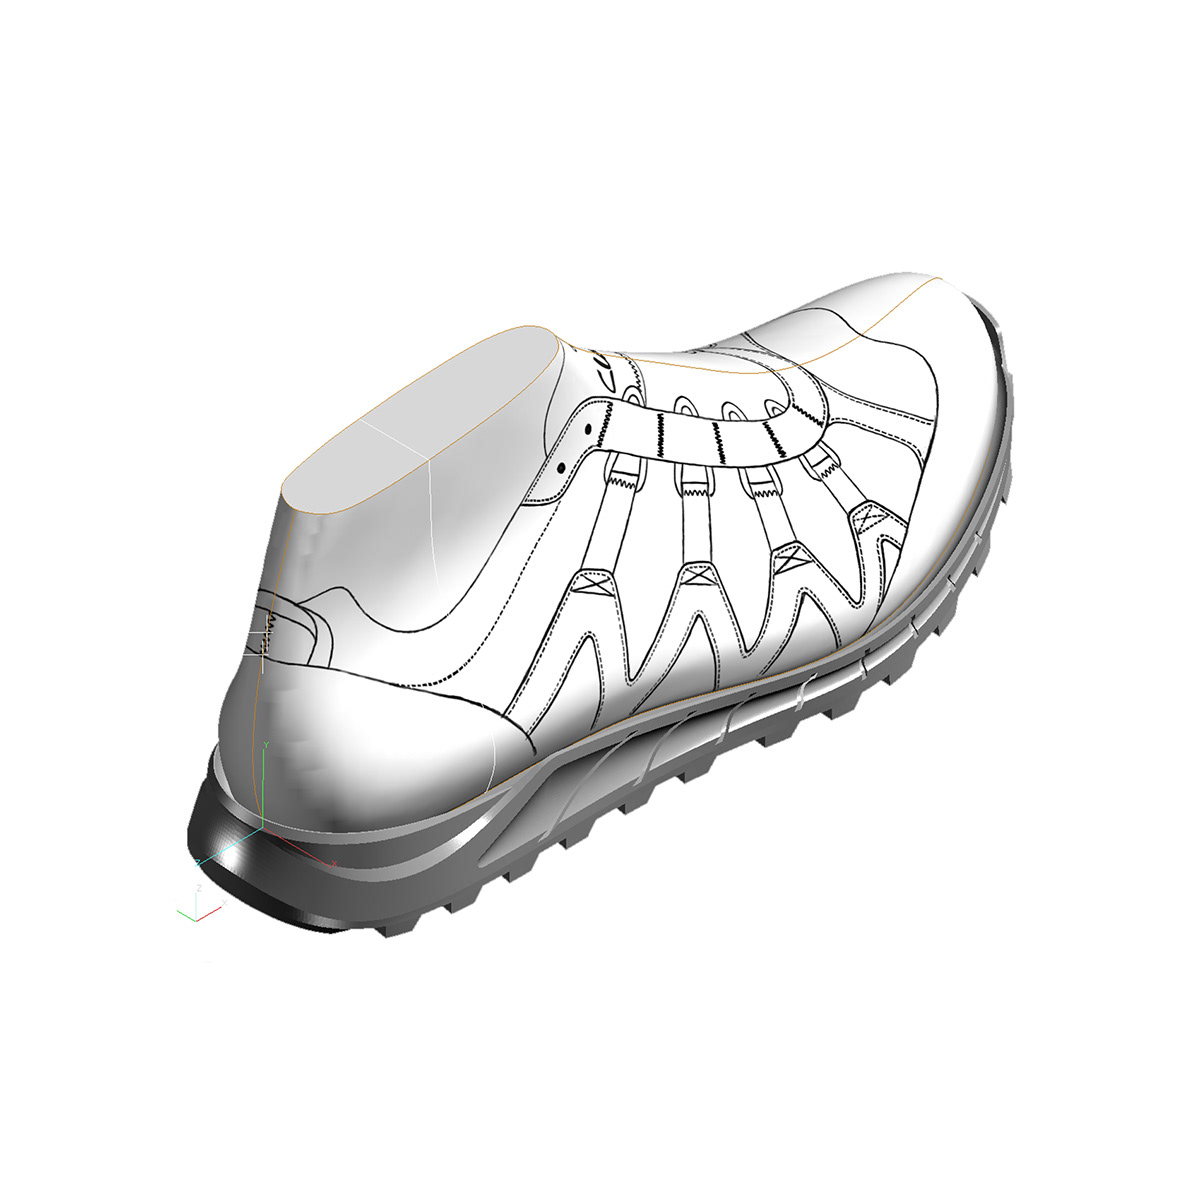 clarks pacer gtx是一款多功能的运动鞋,专为活跃的户外消费者设计.